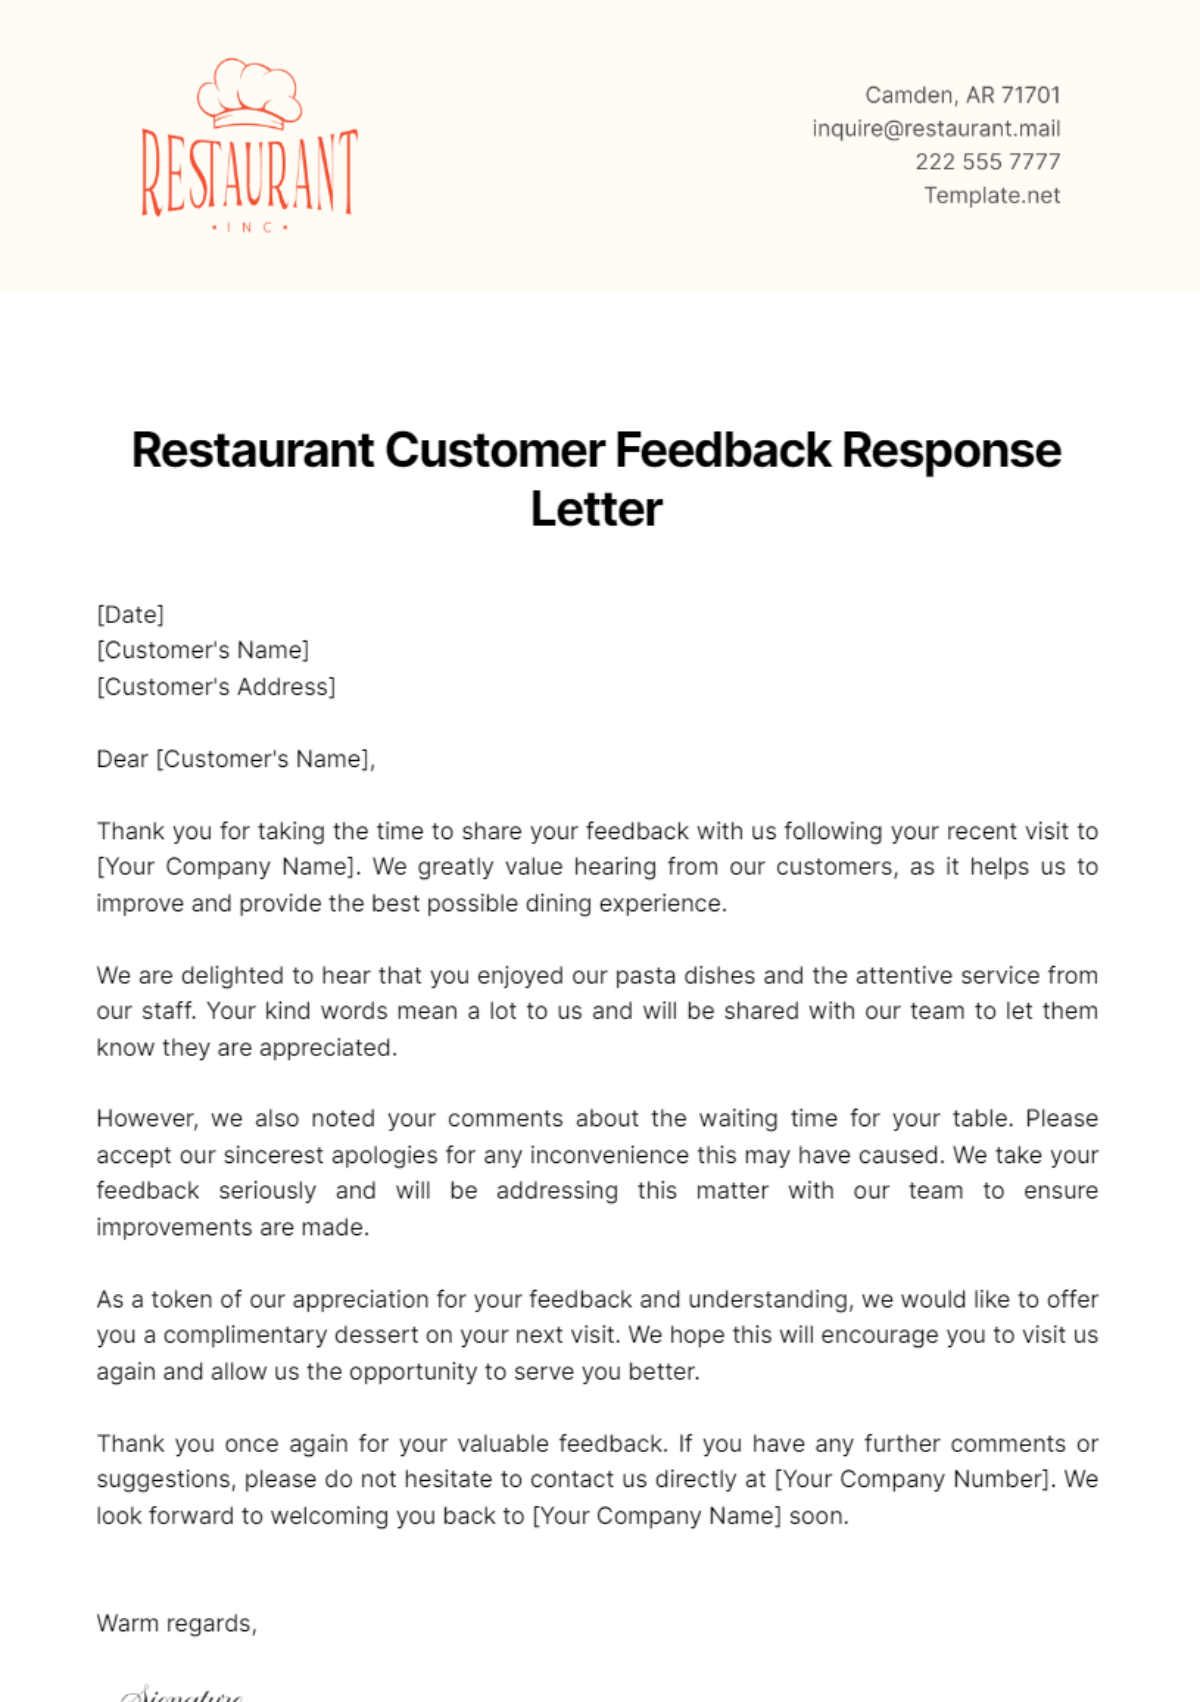 Free Restaurant Customer Feedback Response Letter Template